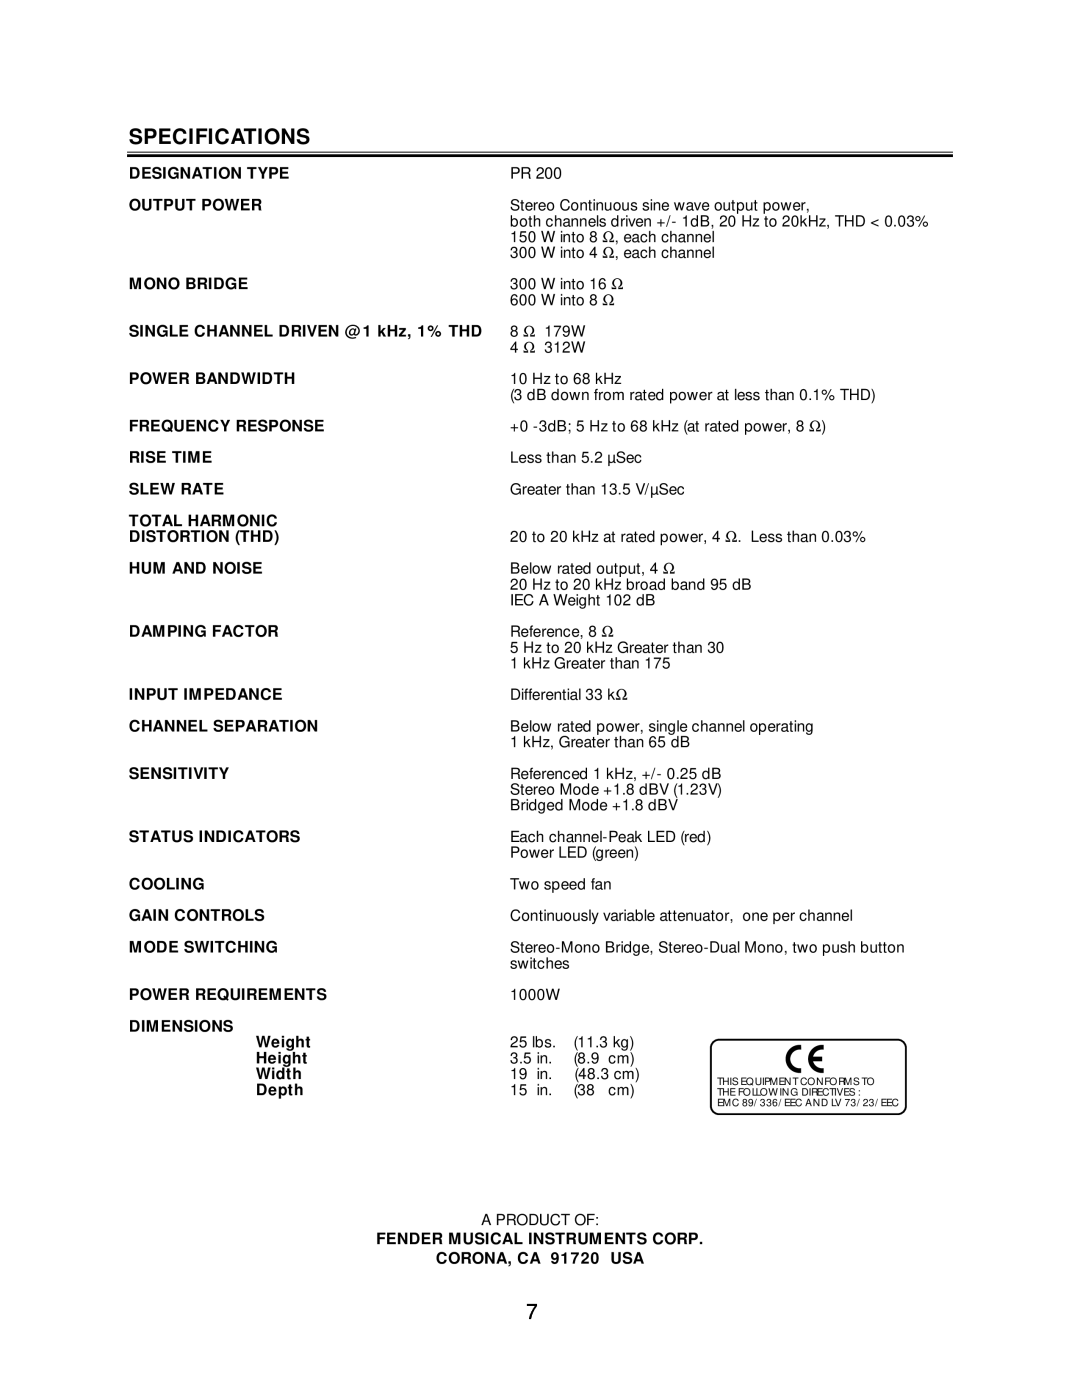 Fender SPL-6000P owner manual Specifications 